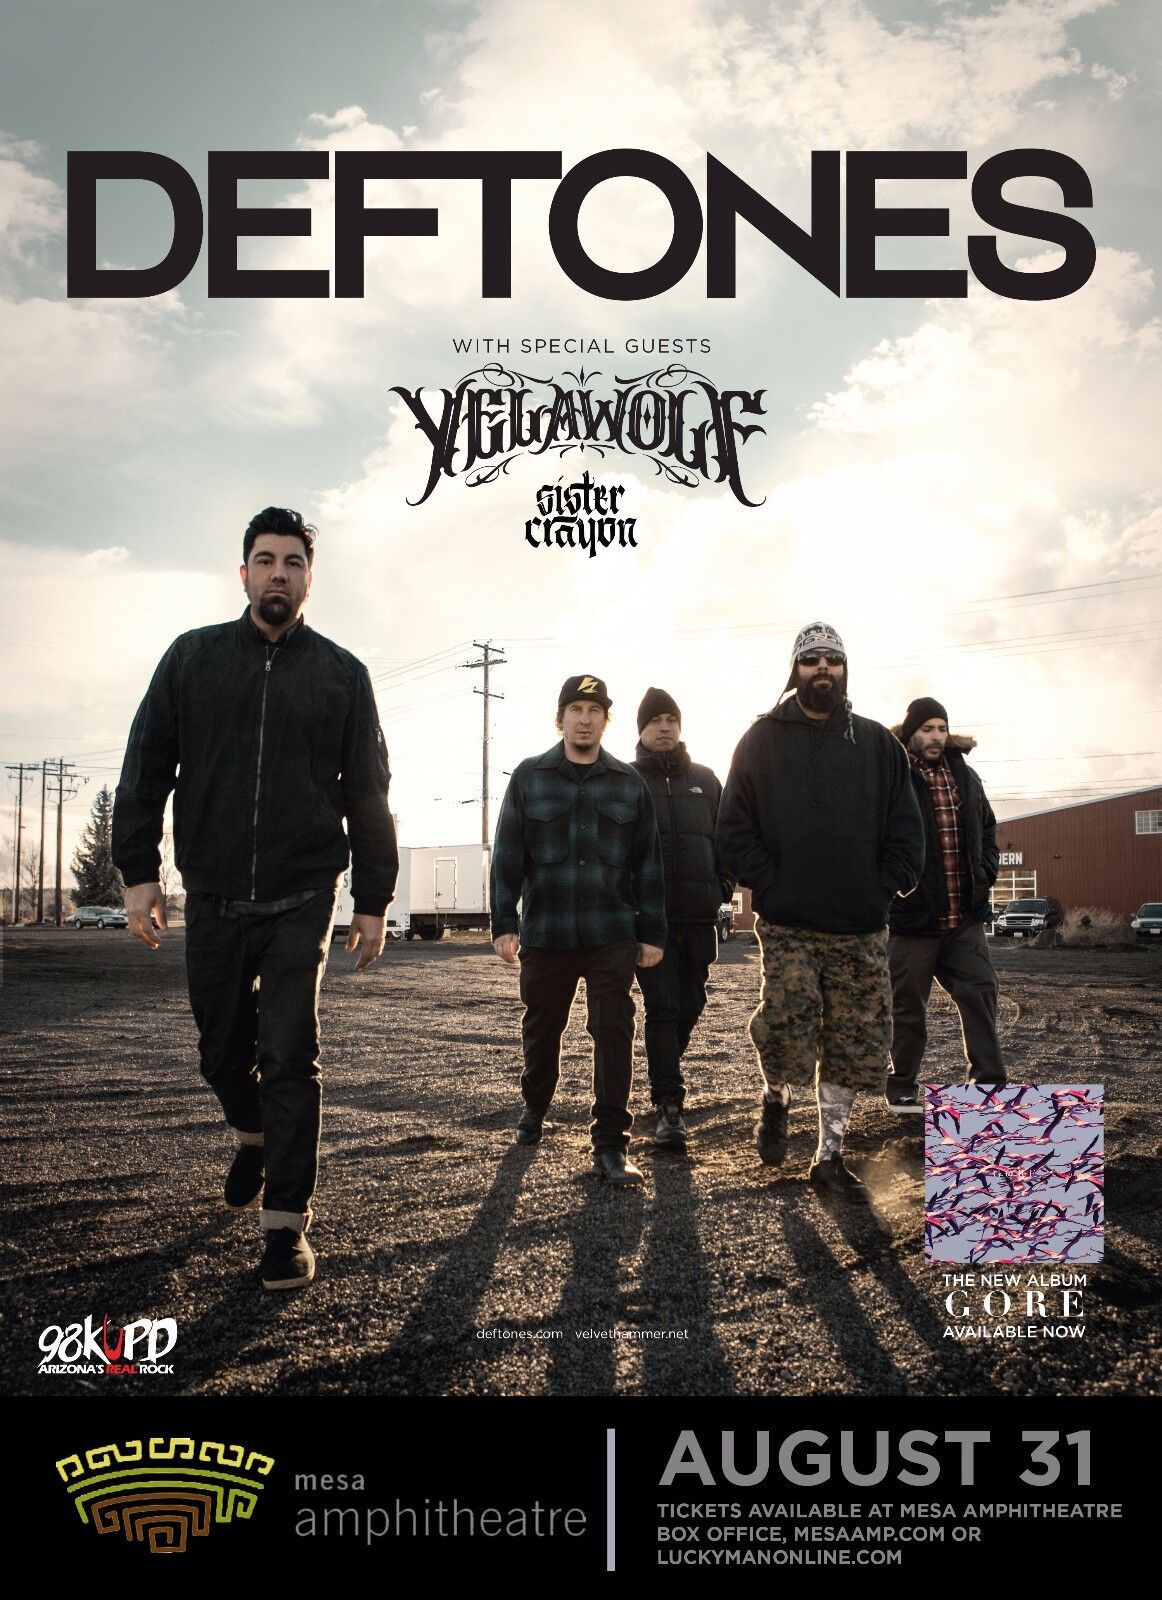 Deftones/yelawolf/sister Crayon 2016 Phoenix Concert Tour Poster-alt Metal Music